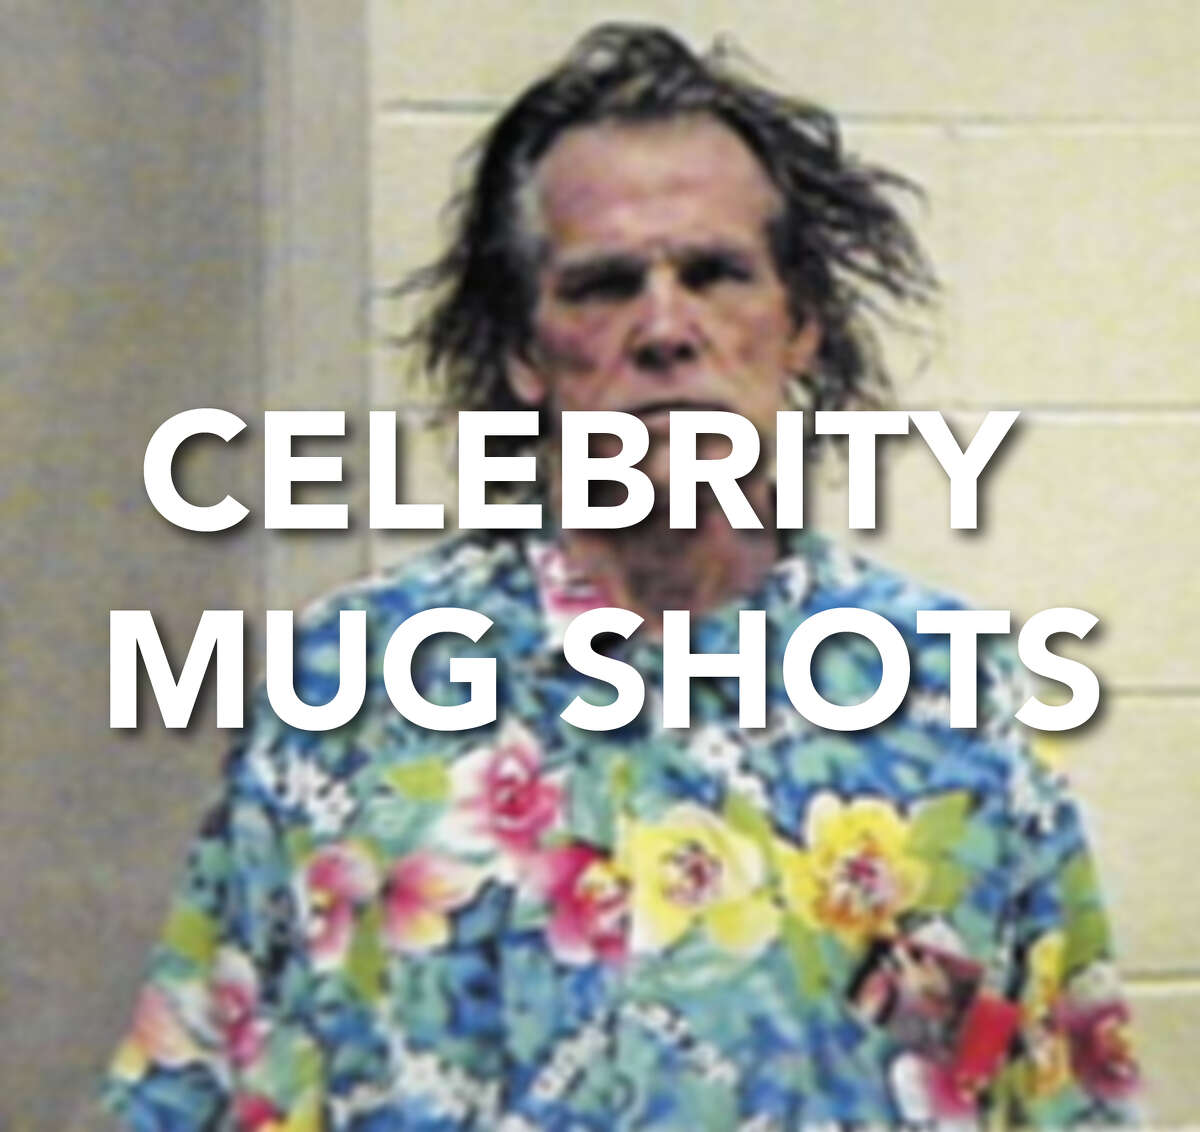 Continue ahead for more celebrity mug shots.